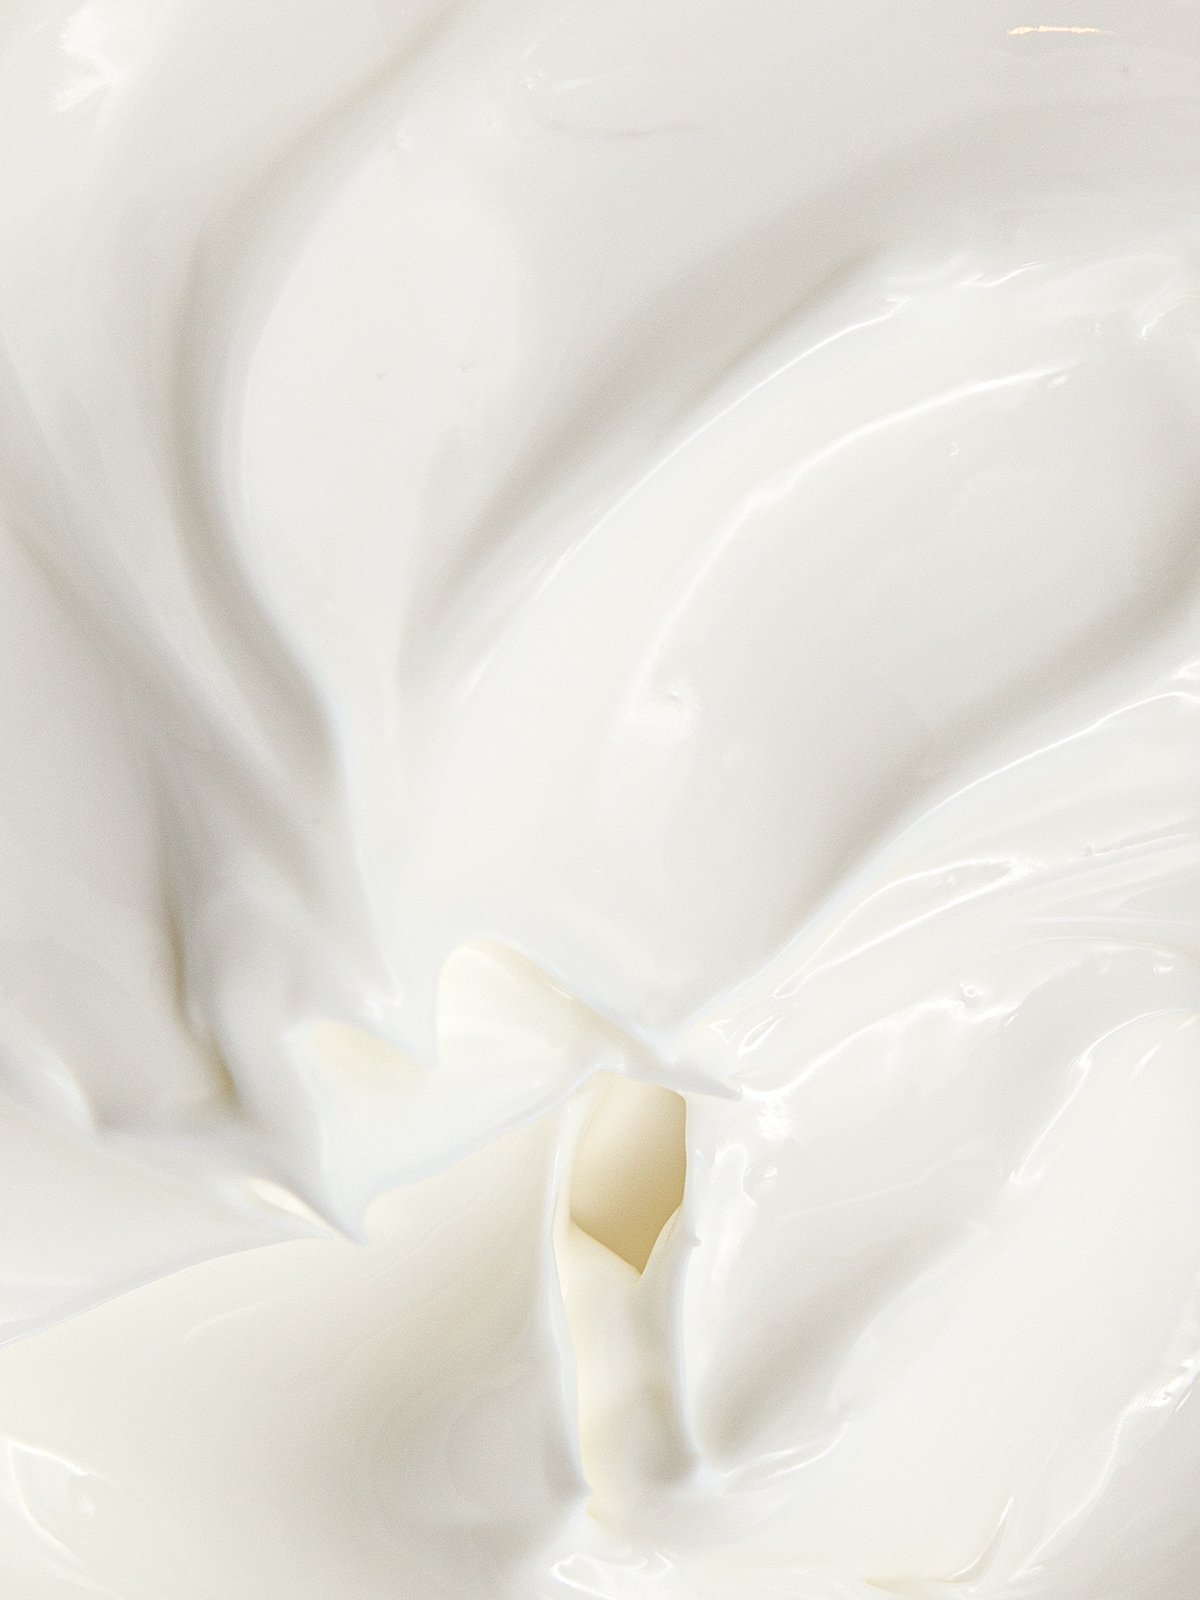 ARAVIA Professional Крем для массажа Modelage Active Cream, 300 мл.